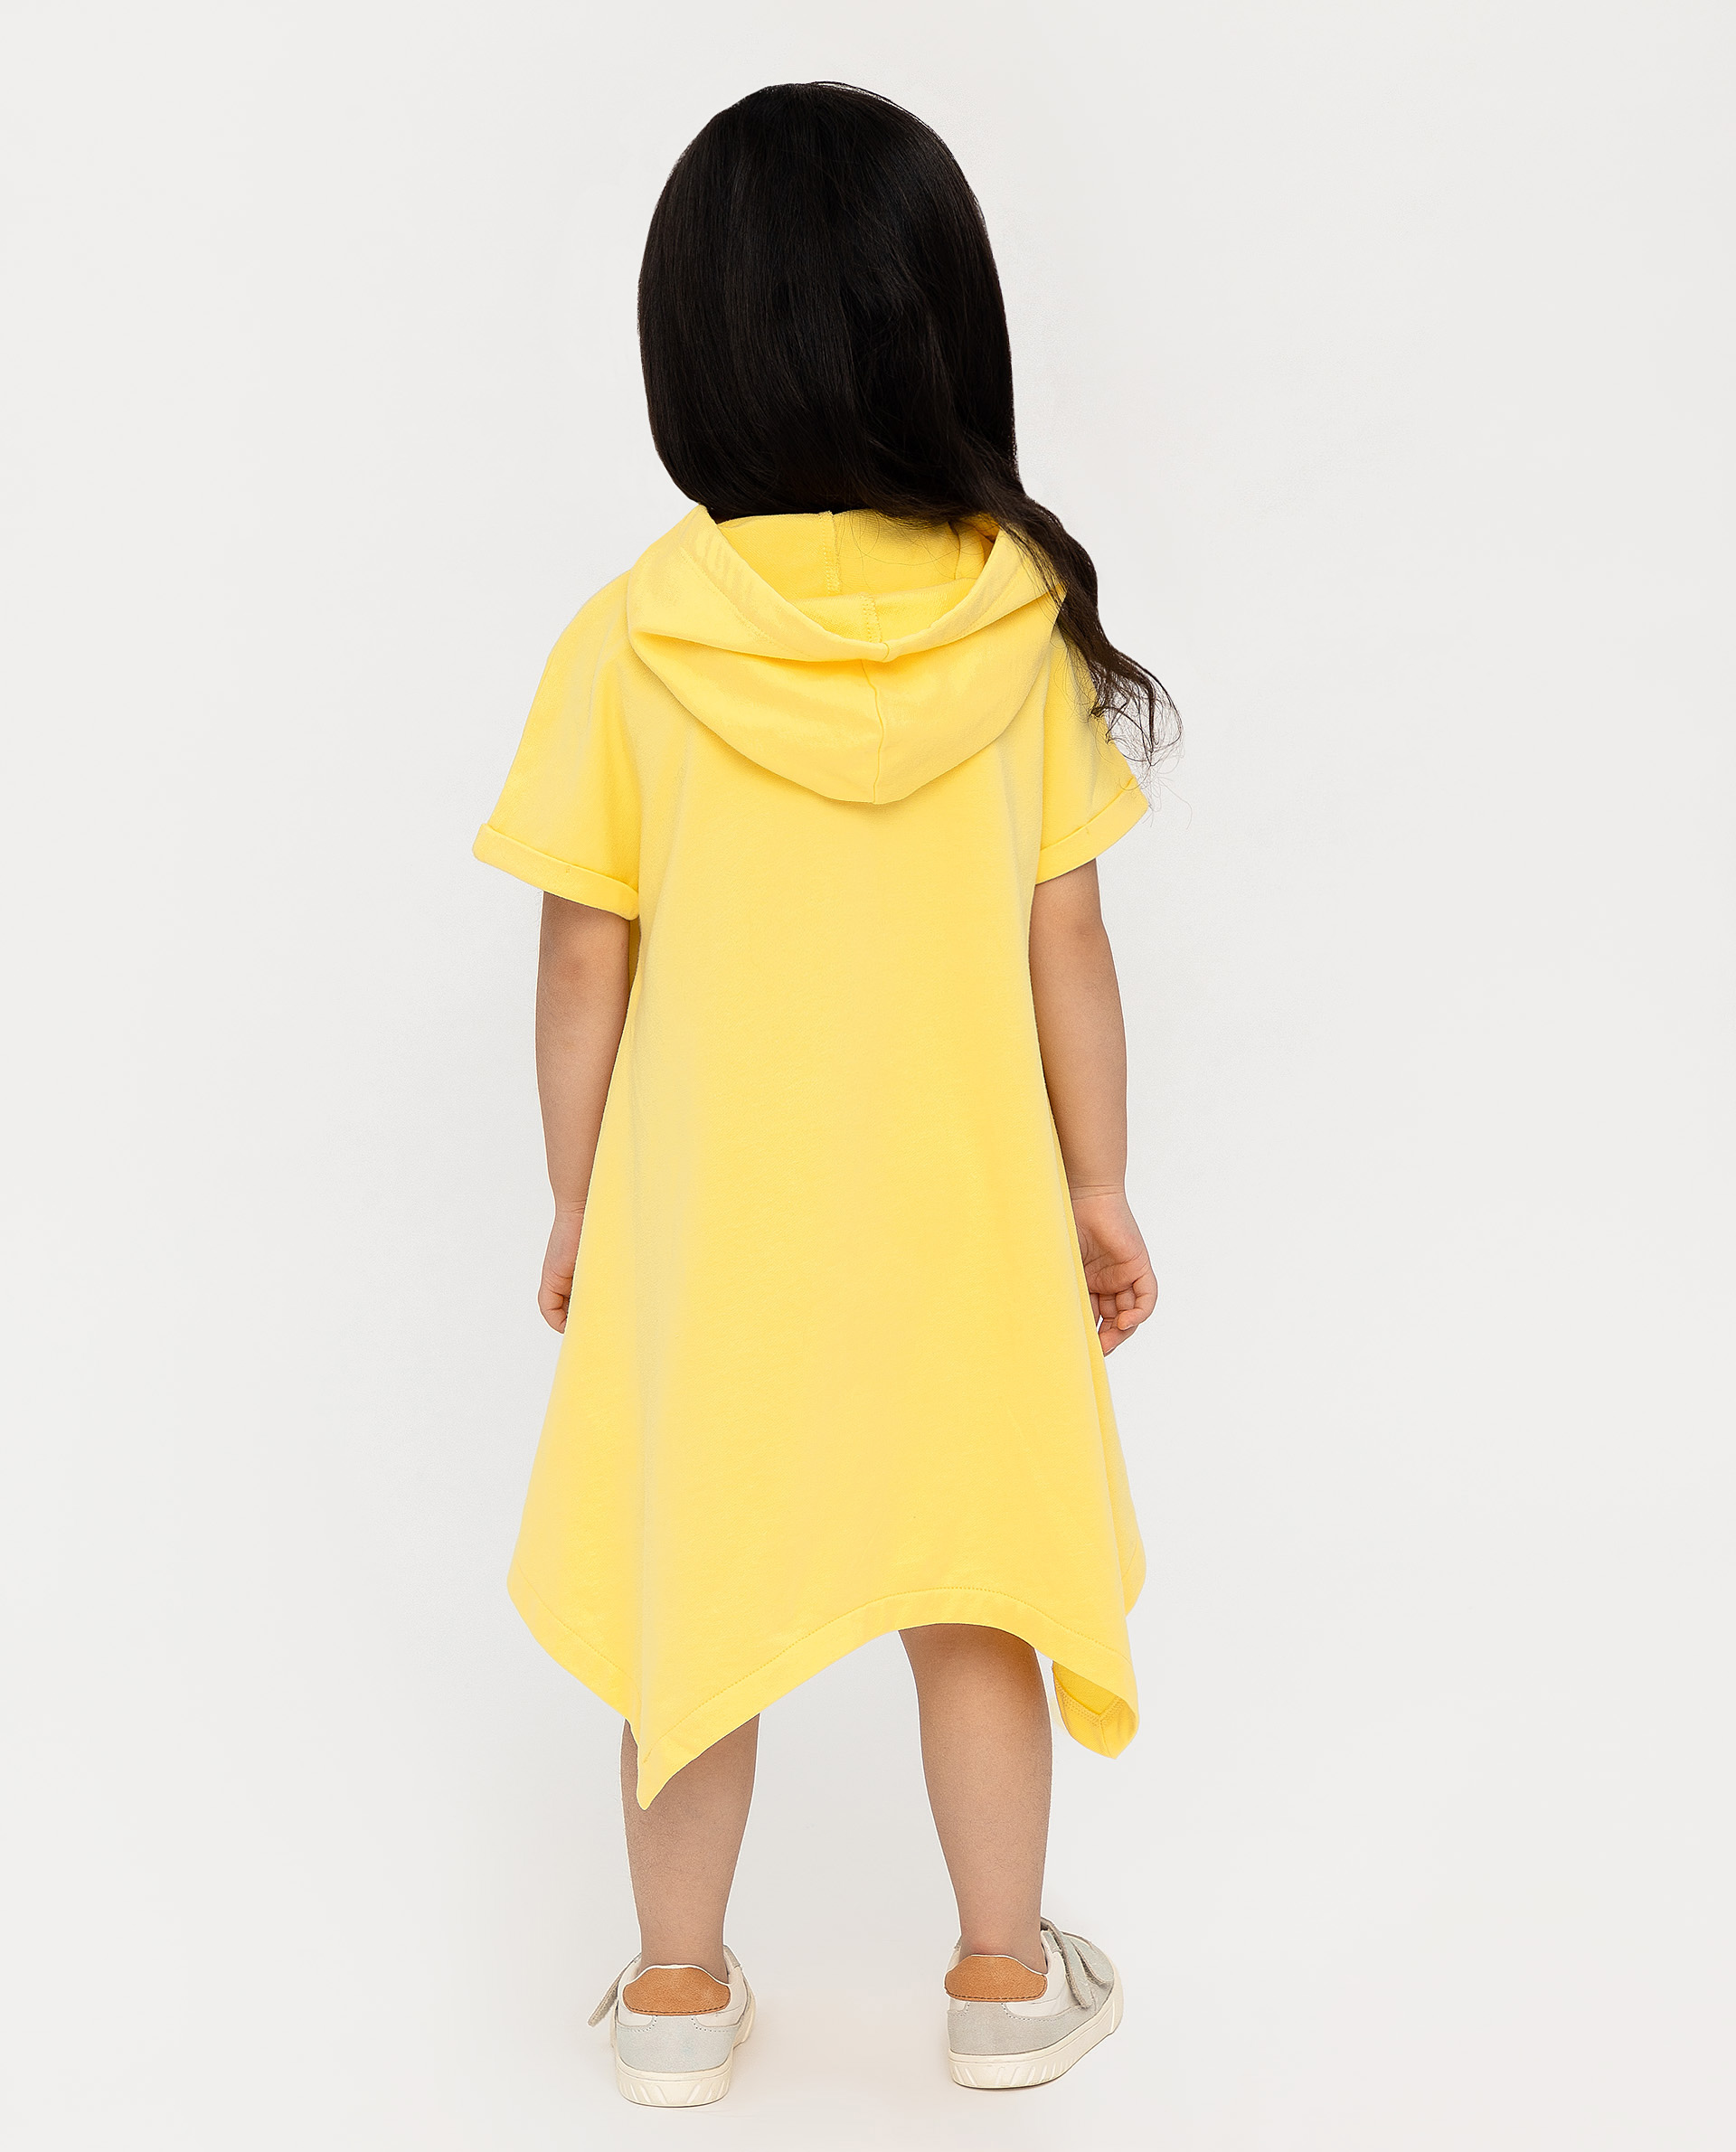 Желтое платье с капюшоном Gulliver 12002GMC5004, размер 98, цвет желтый - фото 3